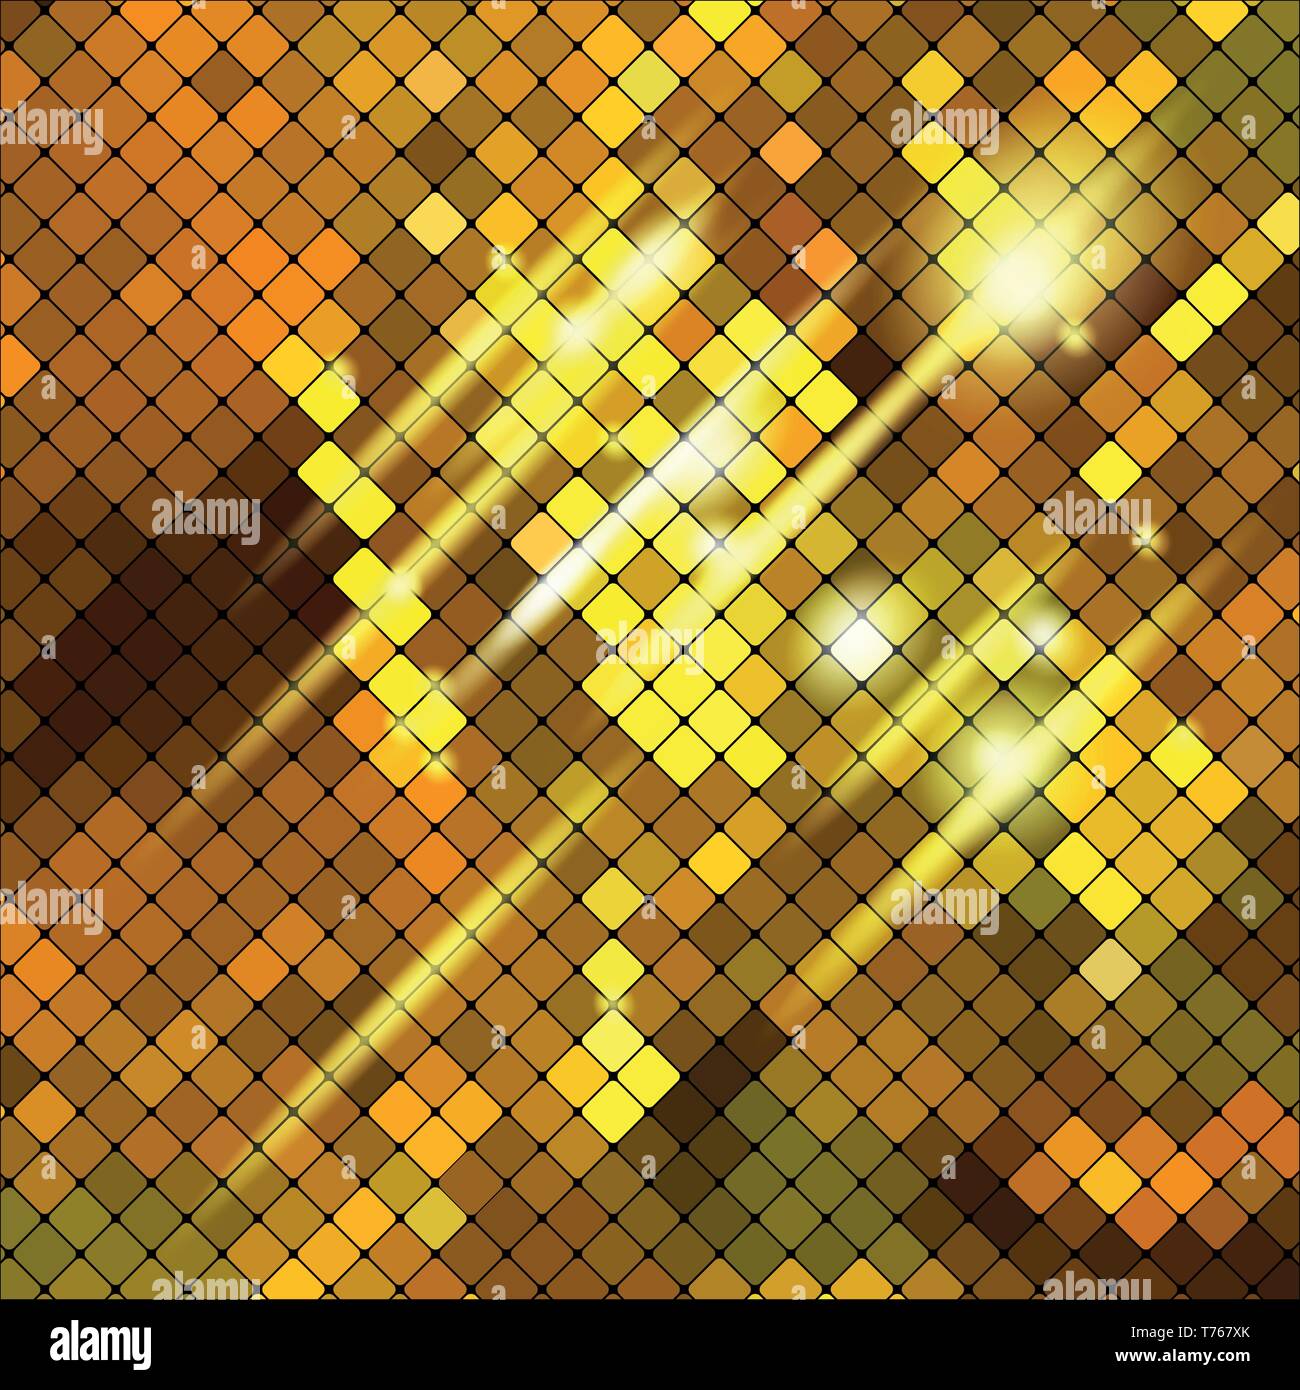 Metallic gold texture. Abstract background. Stock Vector